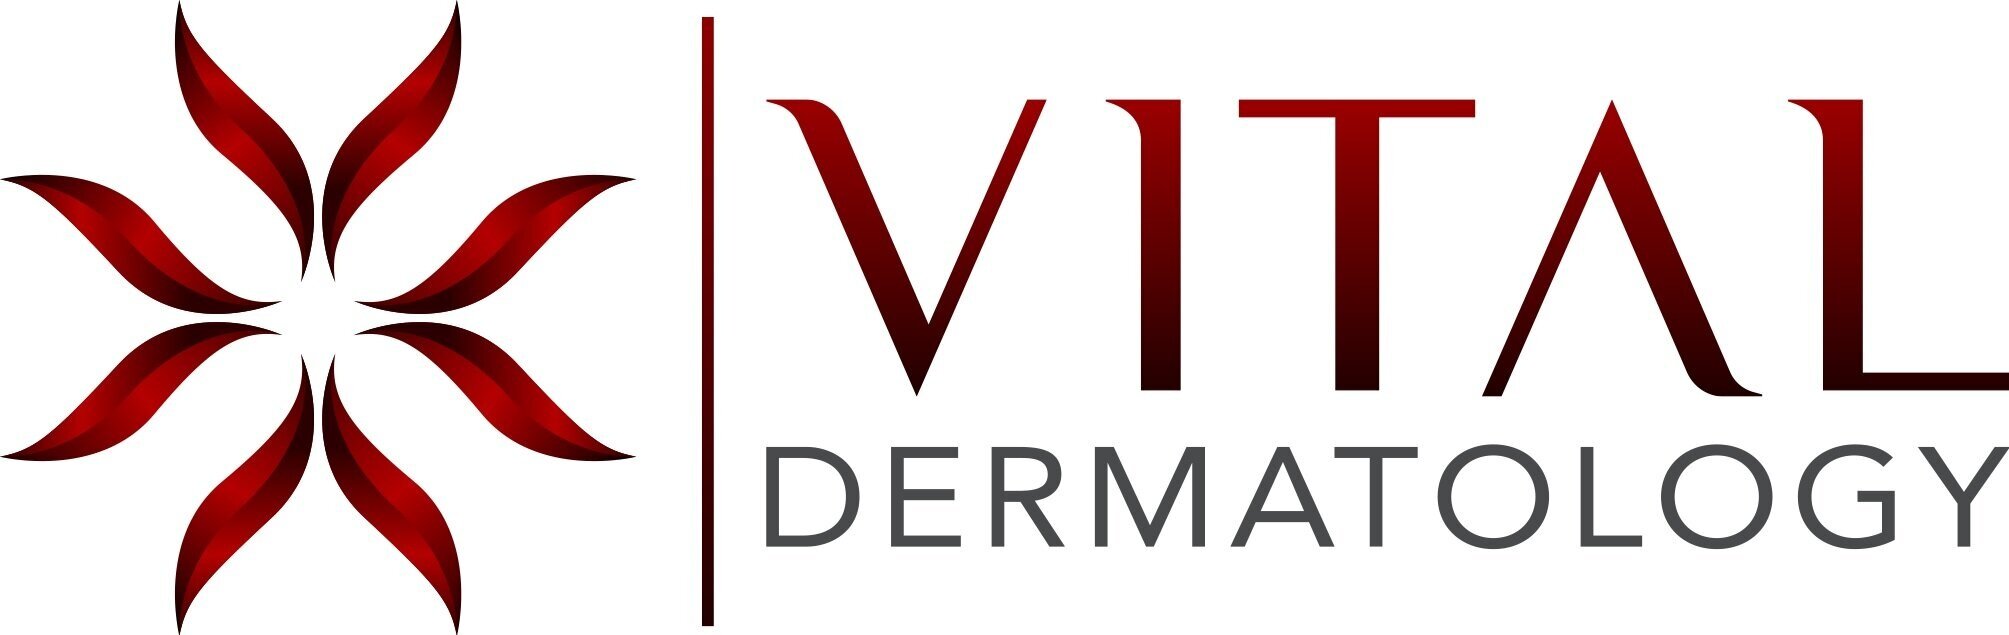 Vital Dermatology - Jenna Beasley M.D.